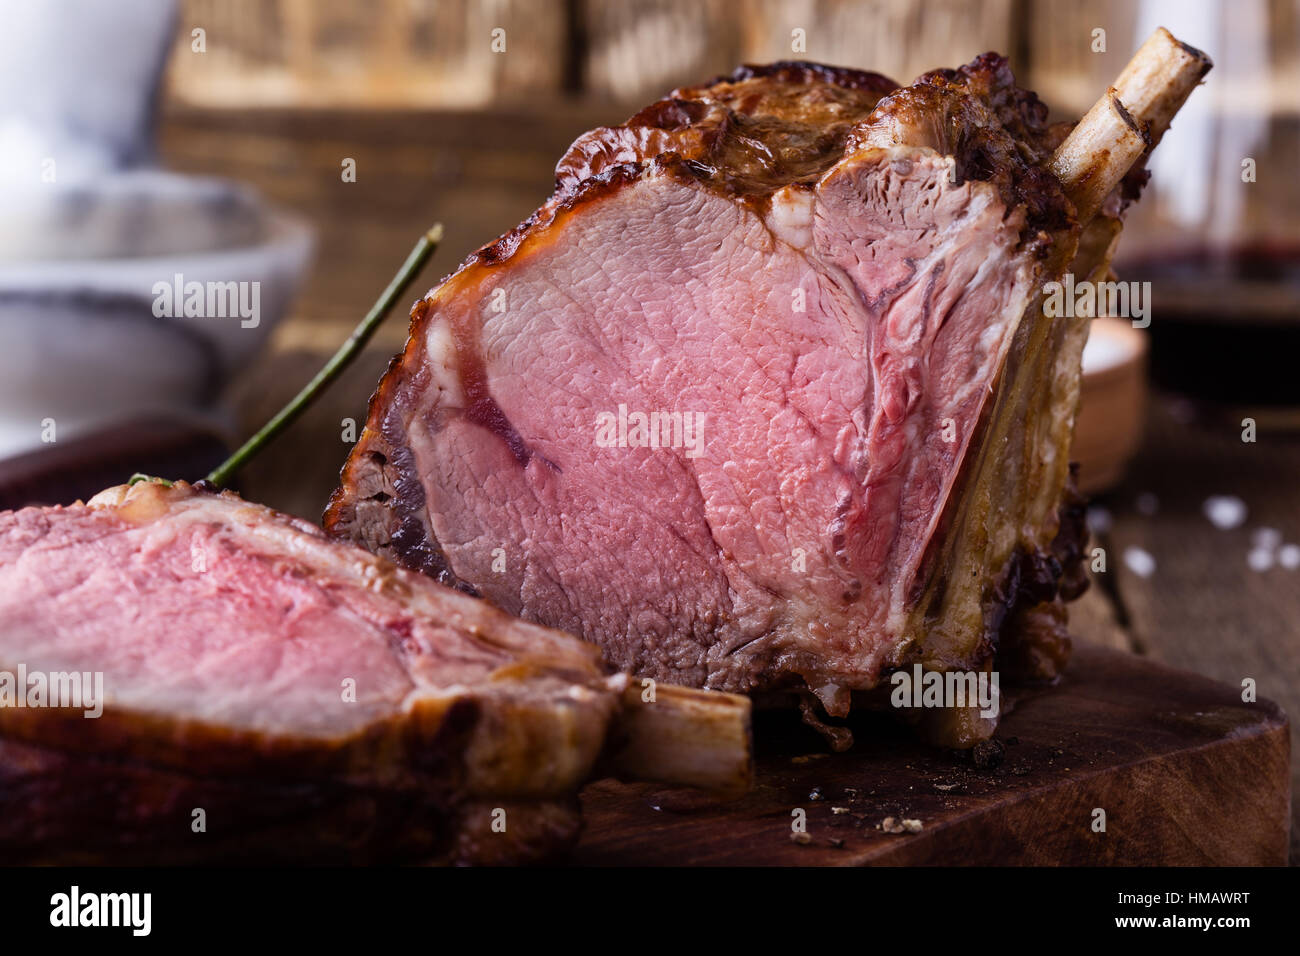 https://c8.alamy.com/comp/HMAWRT/homemade-bone-in-prime-rib-roast-HMAWRT.jpg